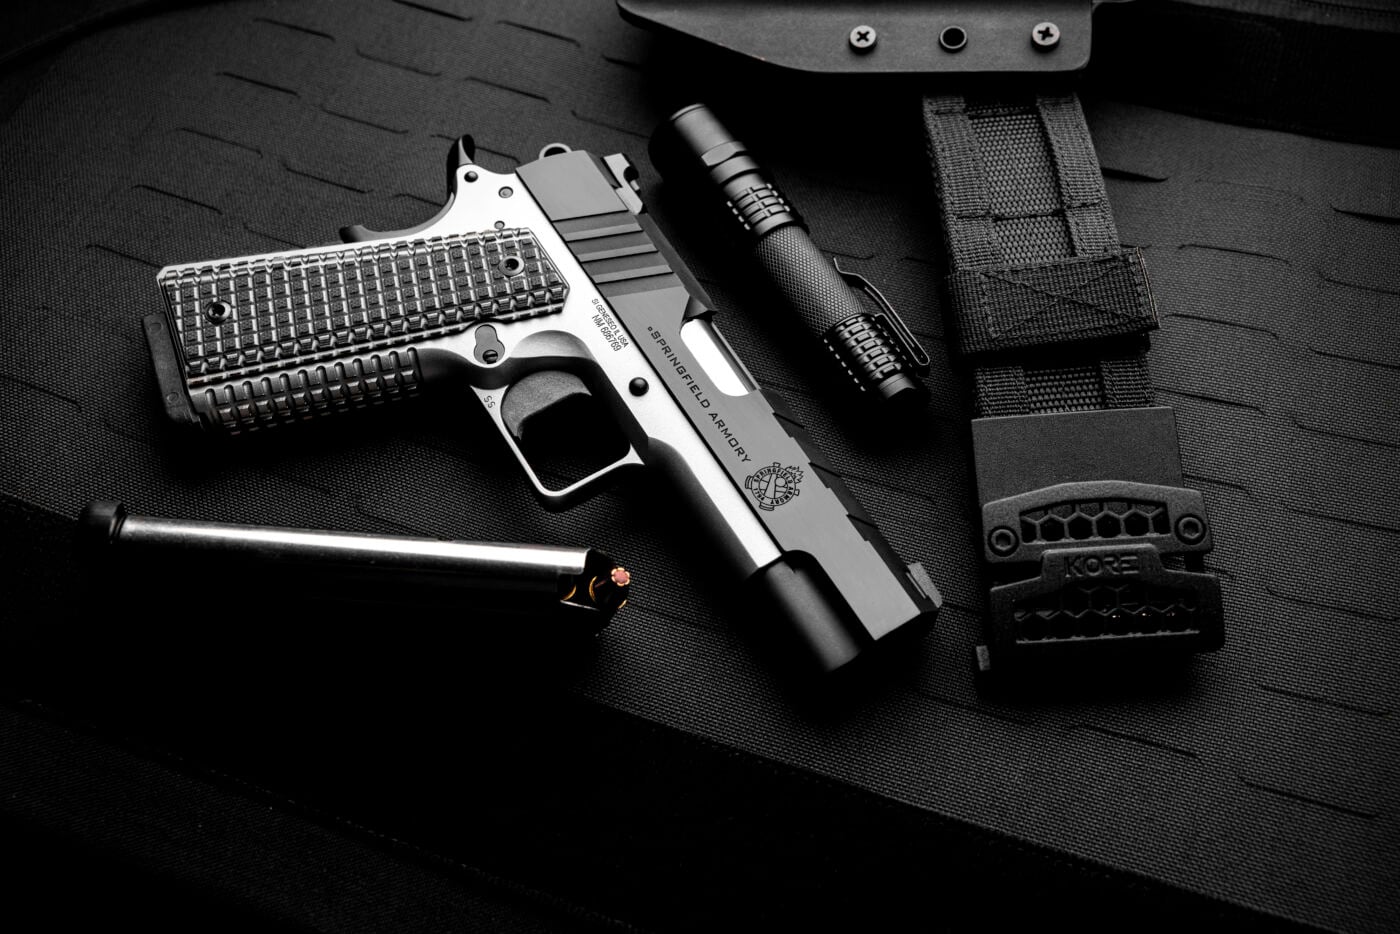 Springfield Emissary 9mm pistol next to loaded magazine and flashlight